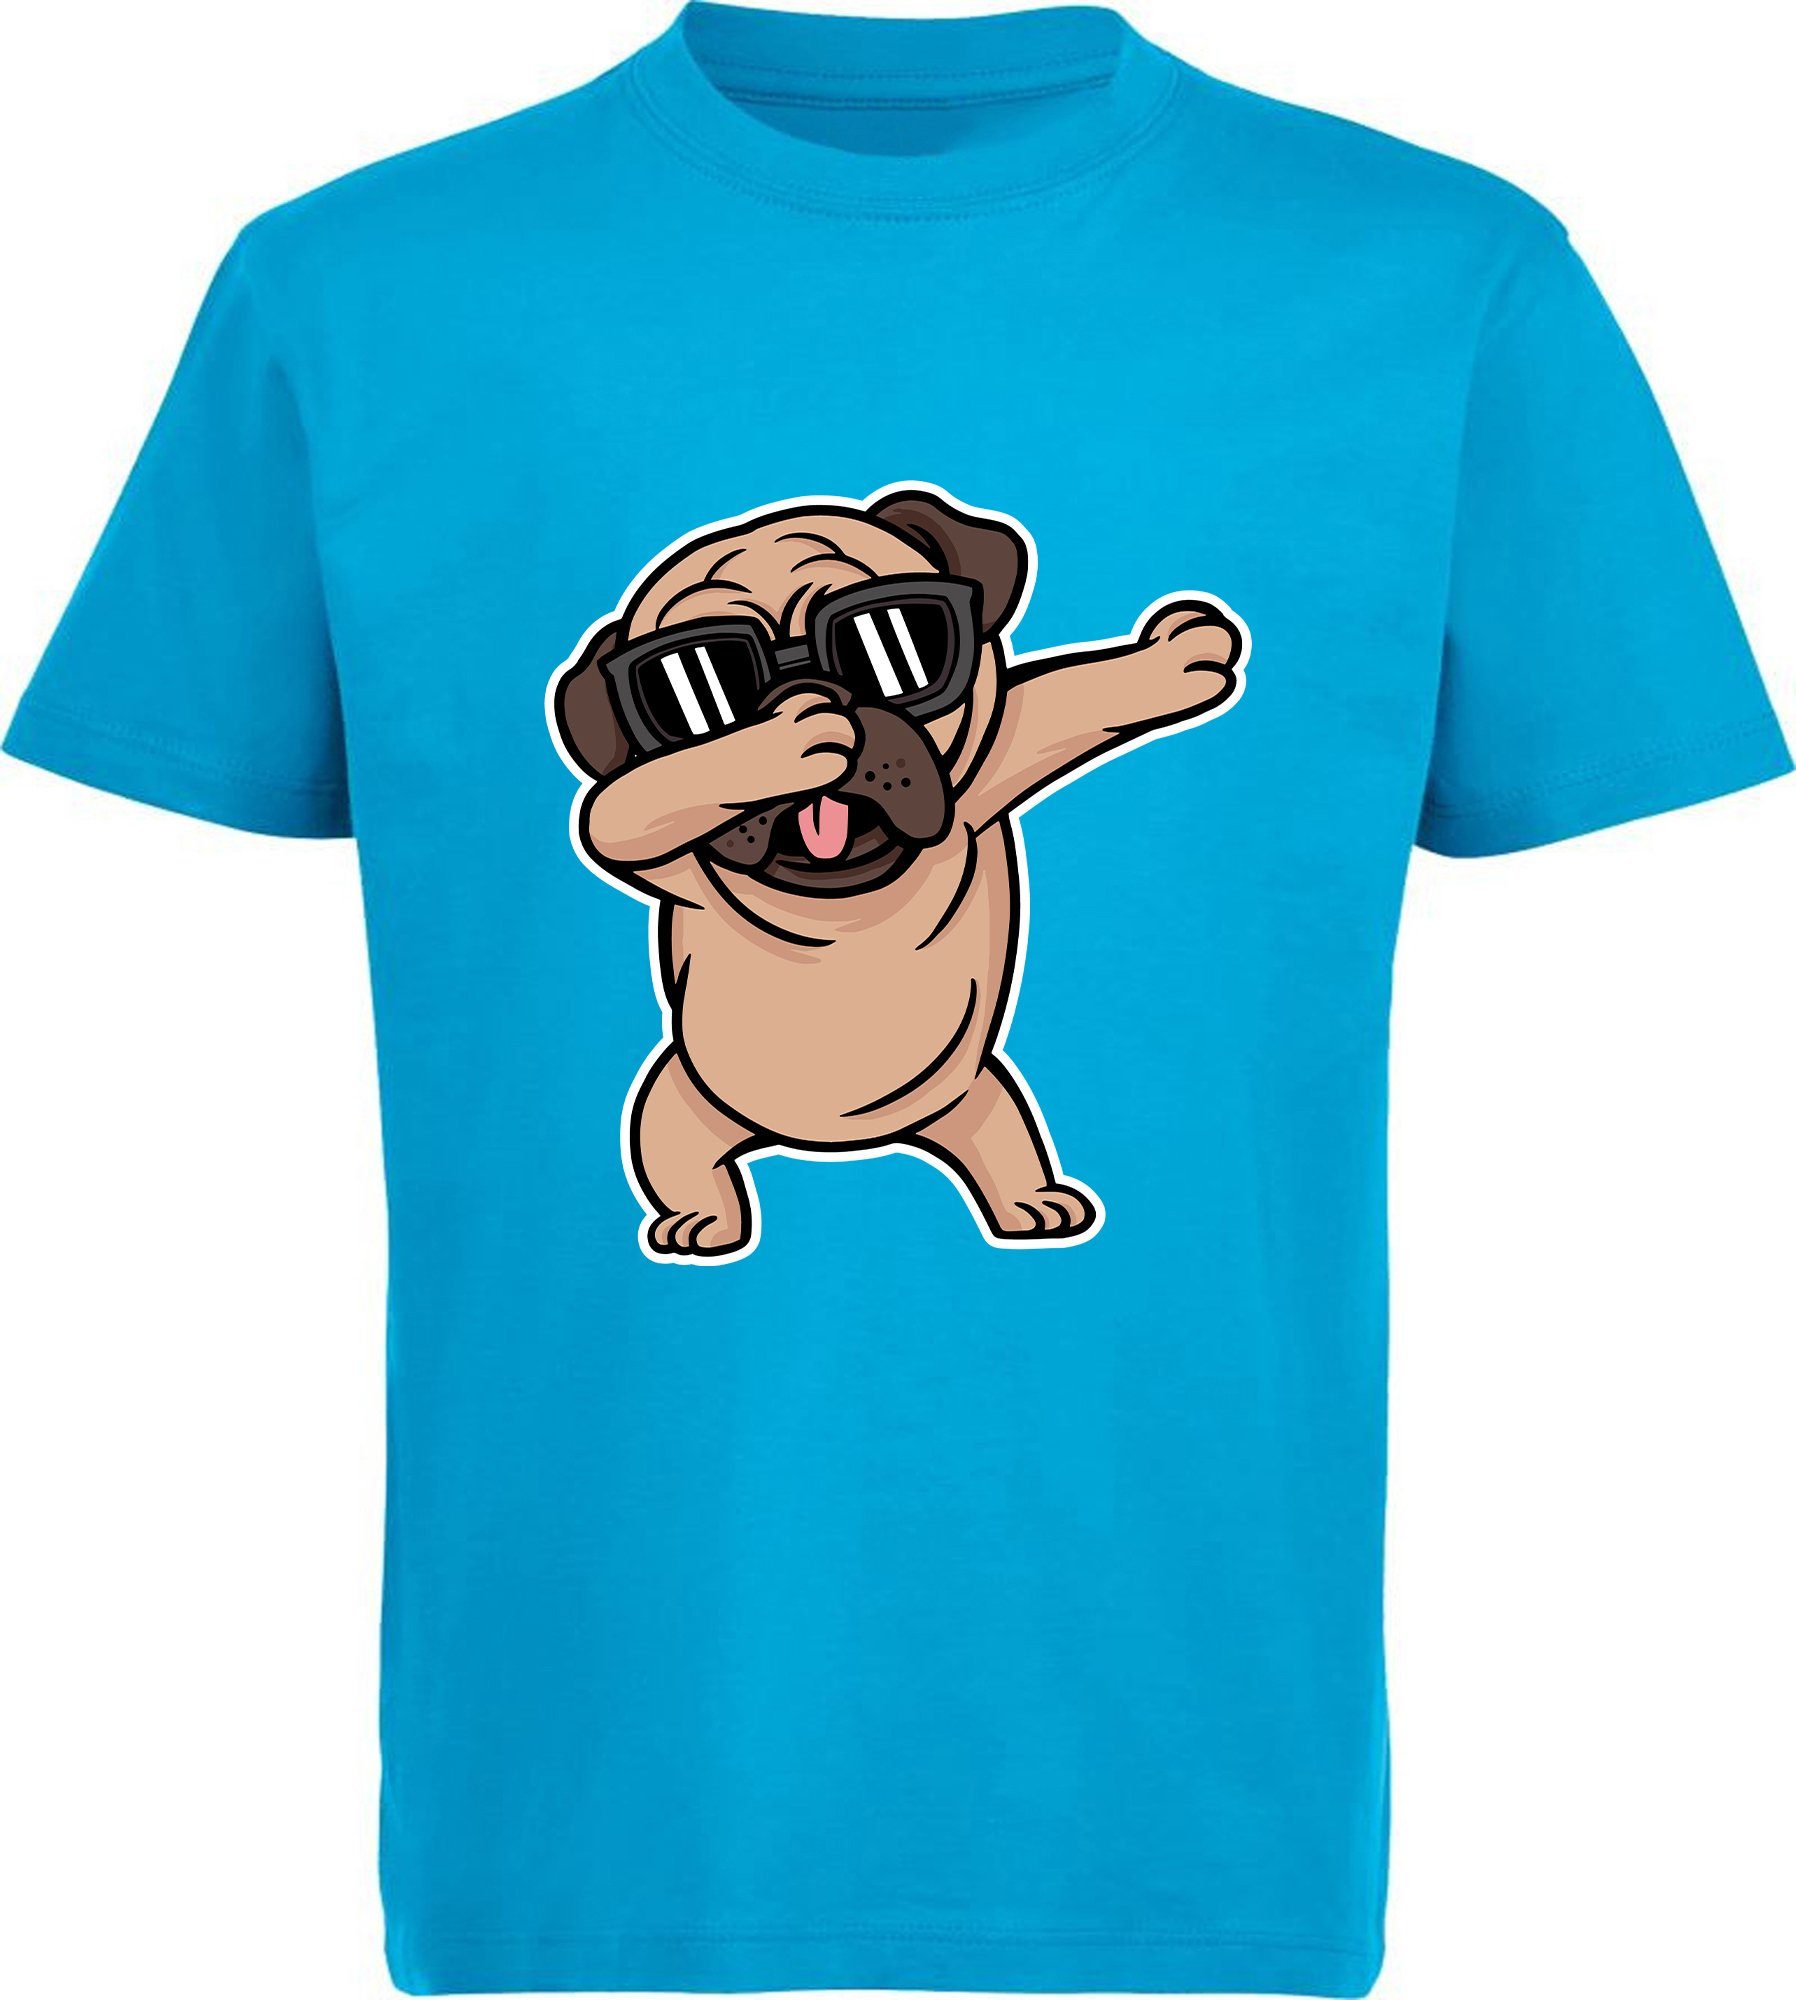 MyDesign24 Print-Shirt Kinder - Hunde Aufdruck, dab Baumwollshirt T-Shirt i238 Hund mit bedruckt aqua blau tanzender